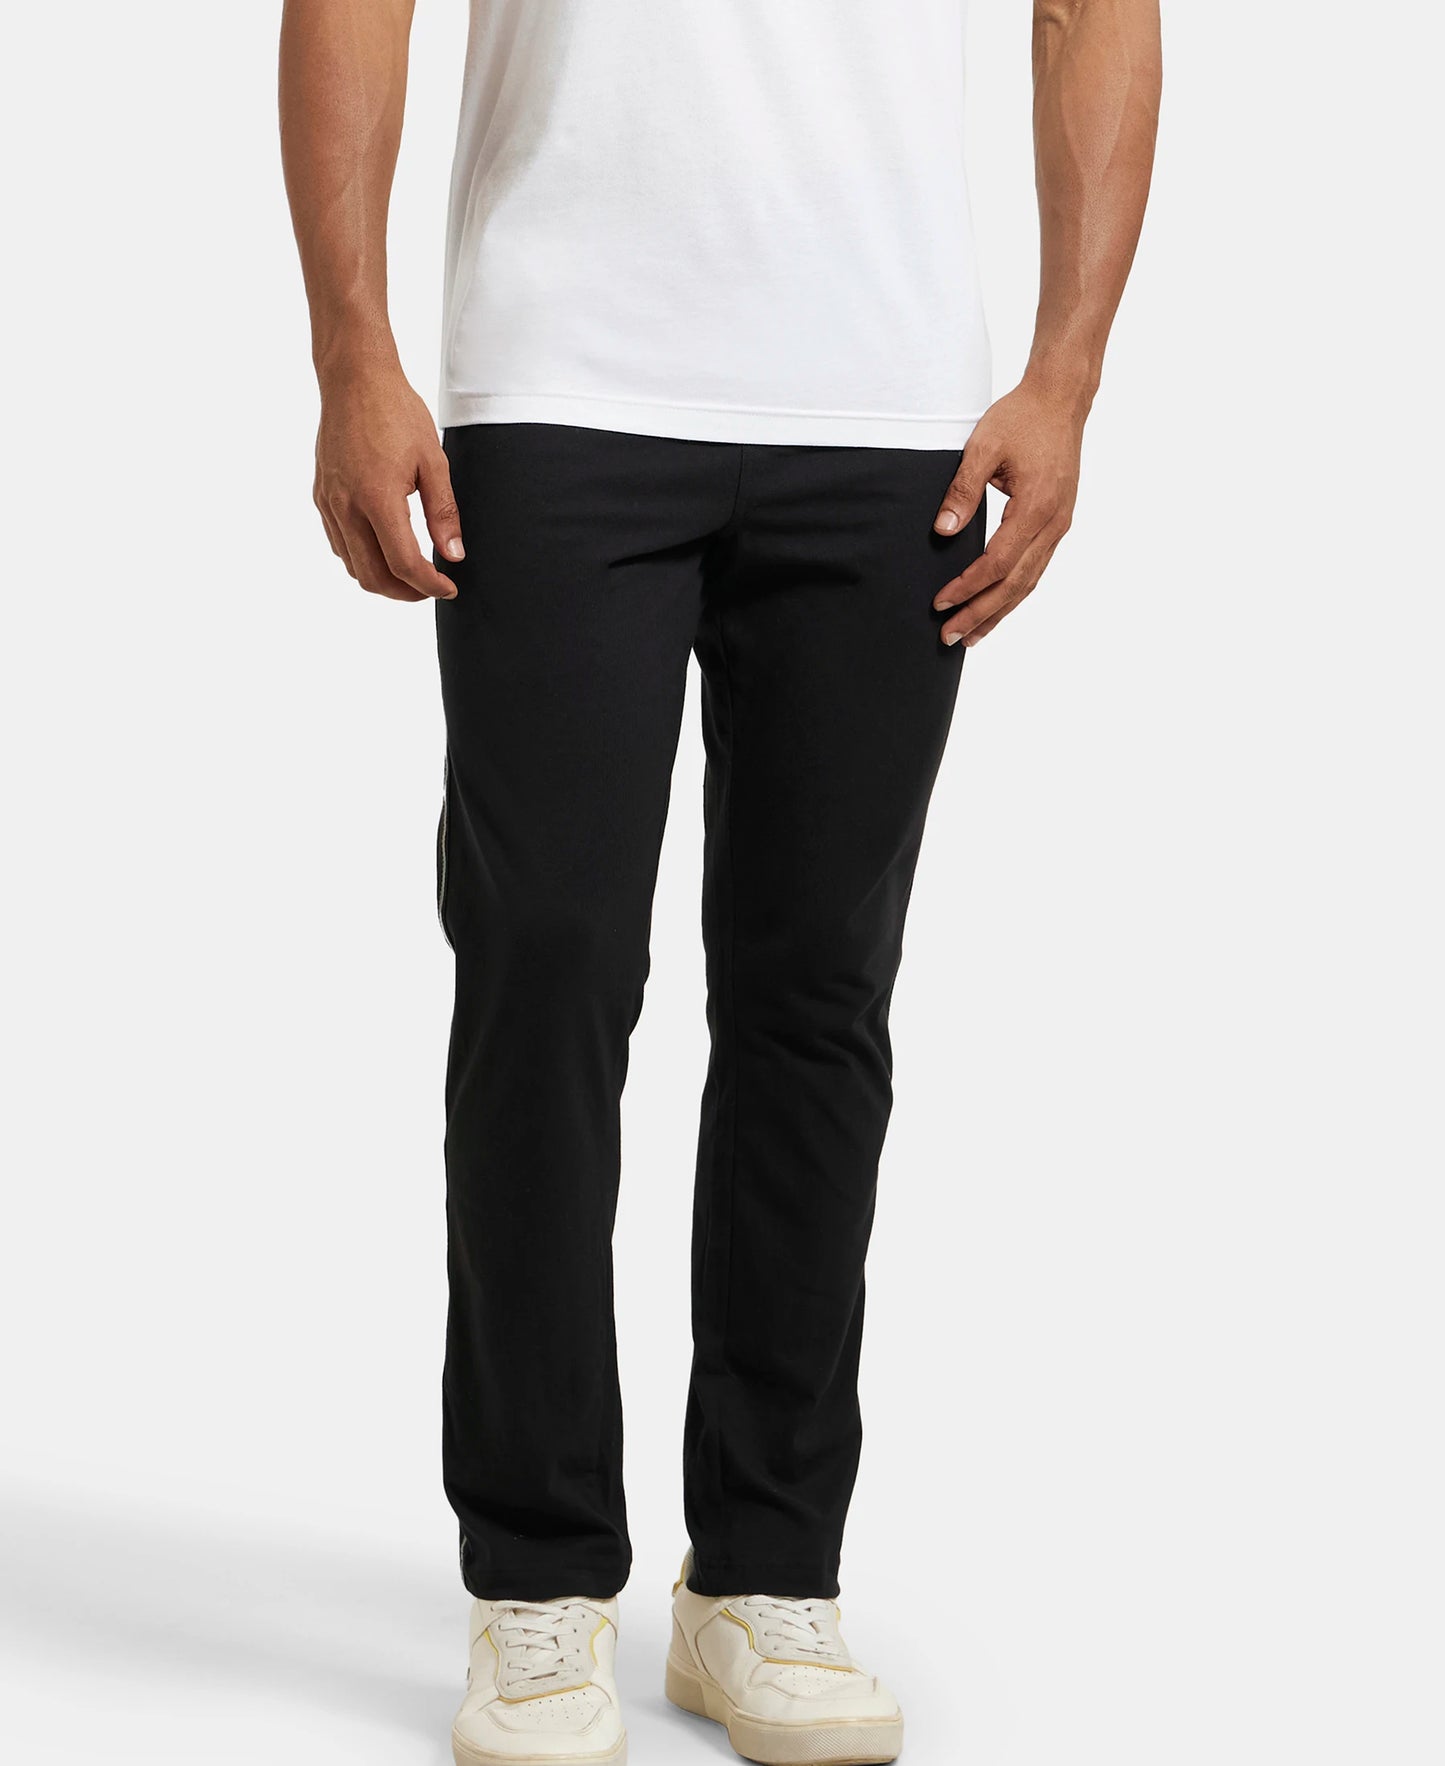 Super Combed Cotton Rich Slim Fit Trackpant with Side and Back Pockets - Black & Grey Melange-5